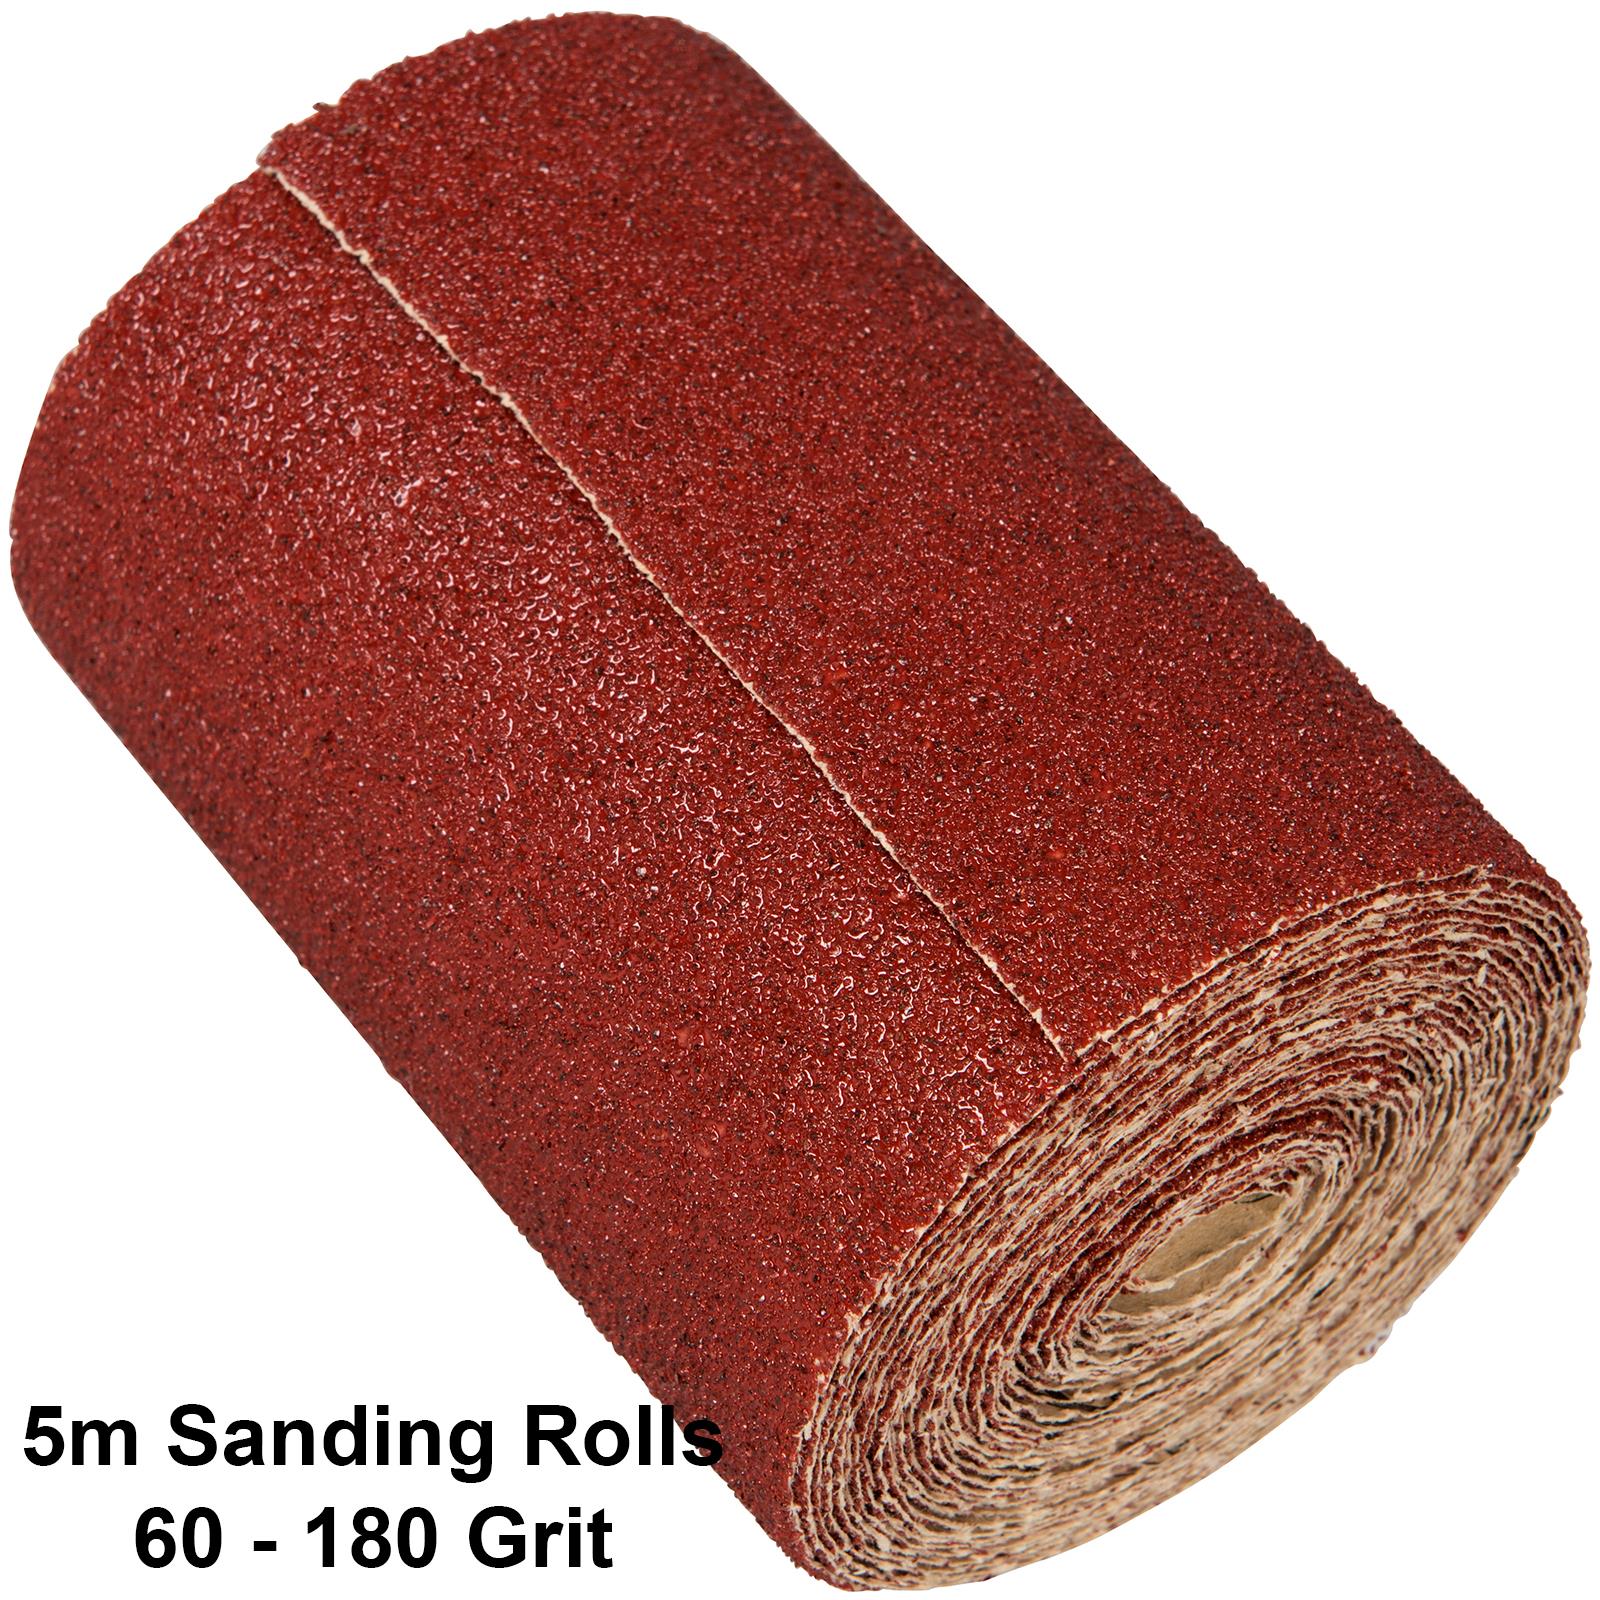 Silverline 5m Aluminium Oxide Sanding Roll 60-180 Grit